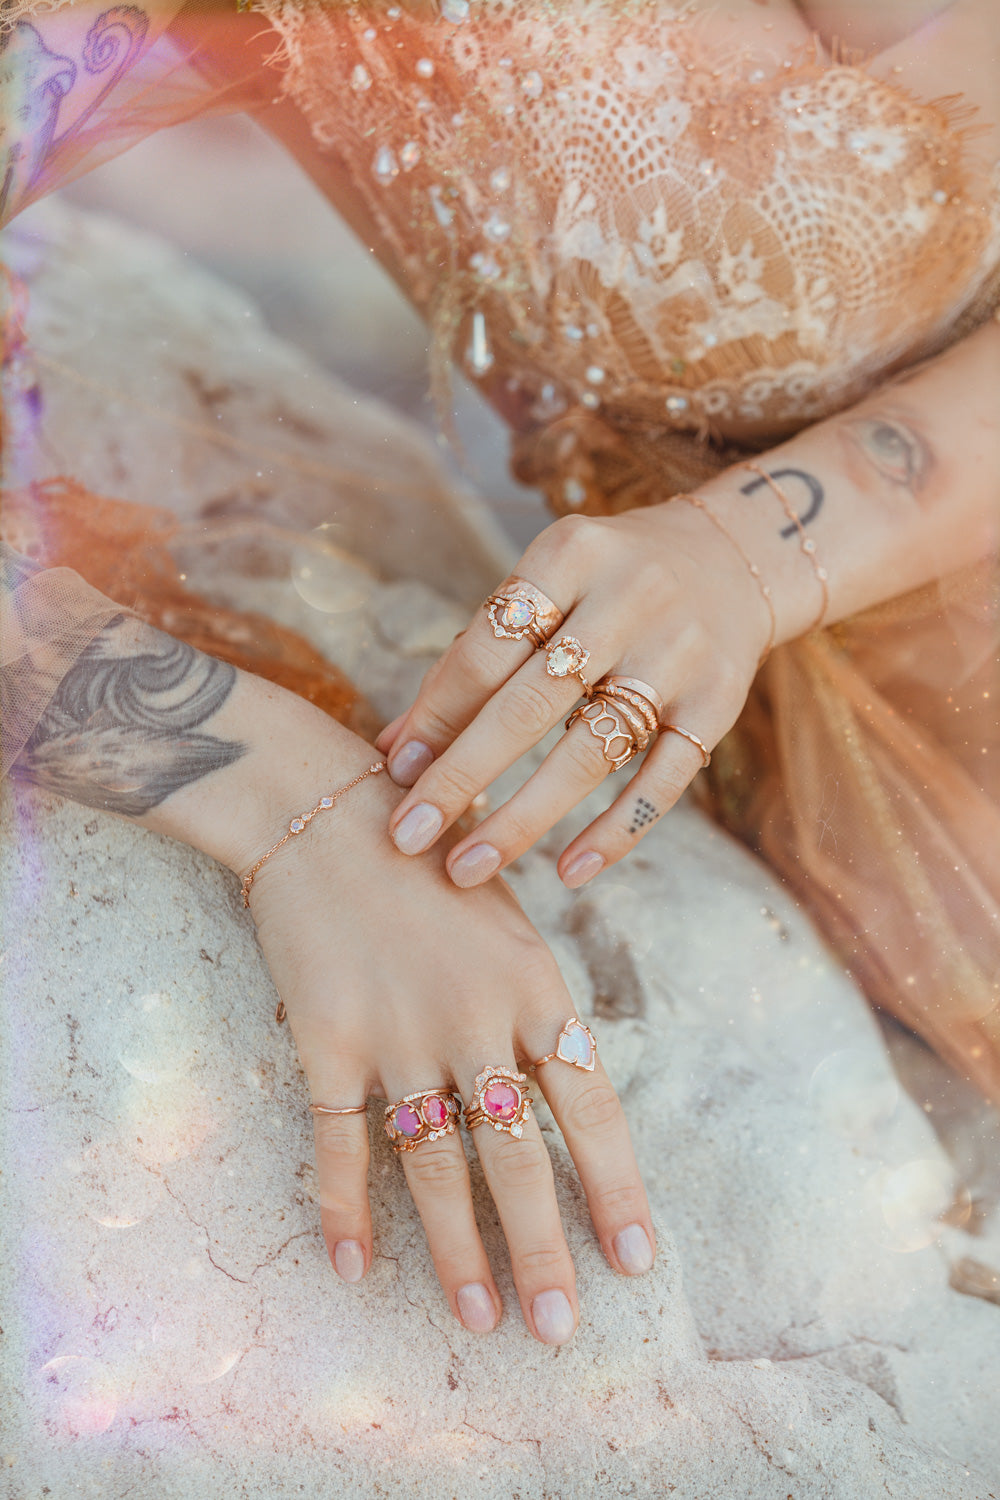 Infinite Love Peachy Pink Sapphire Ring